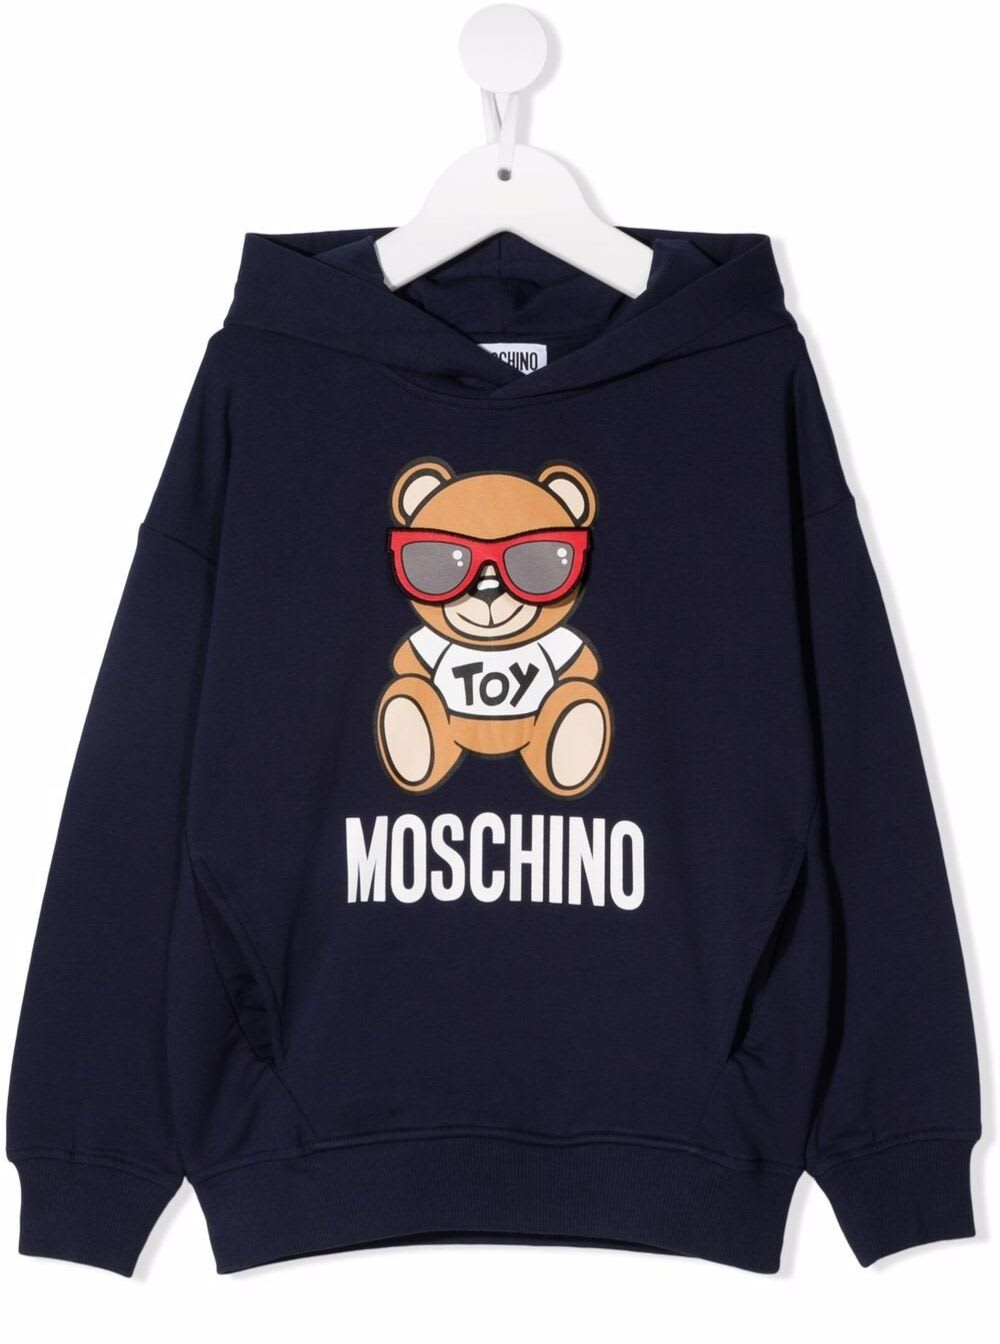 Moschino Boy Cotton Blue Hoodie With Teddy Bear Print